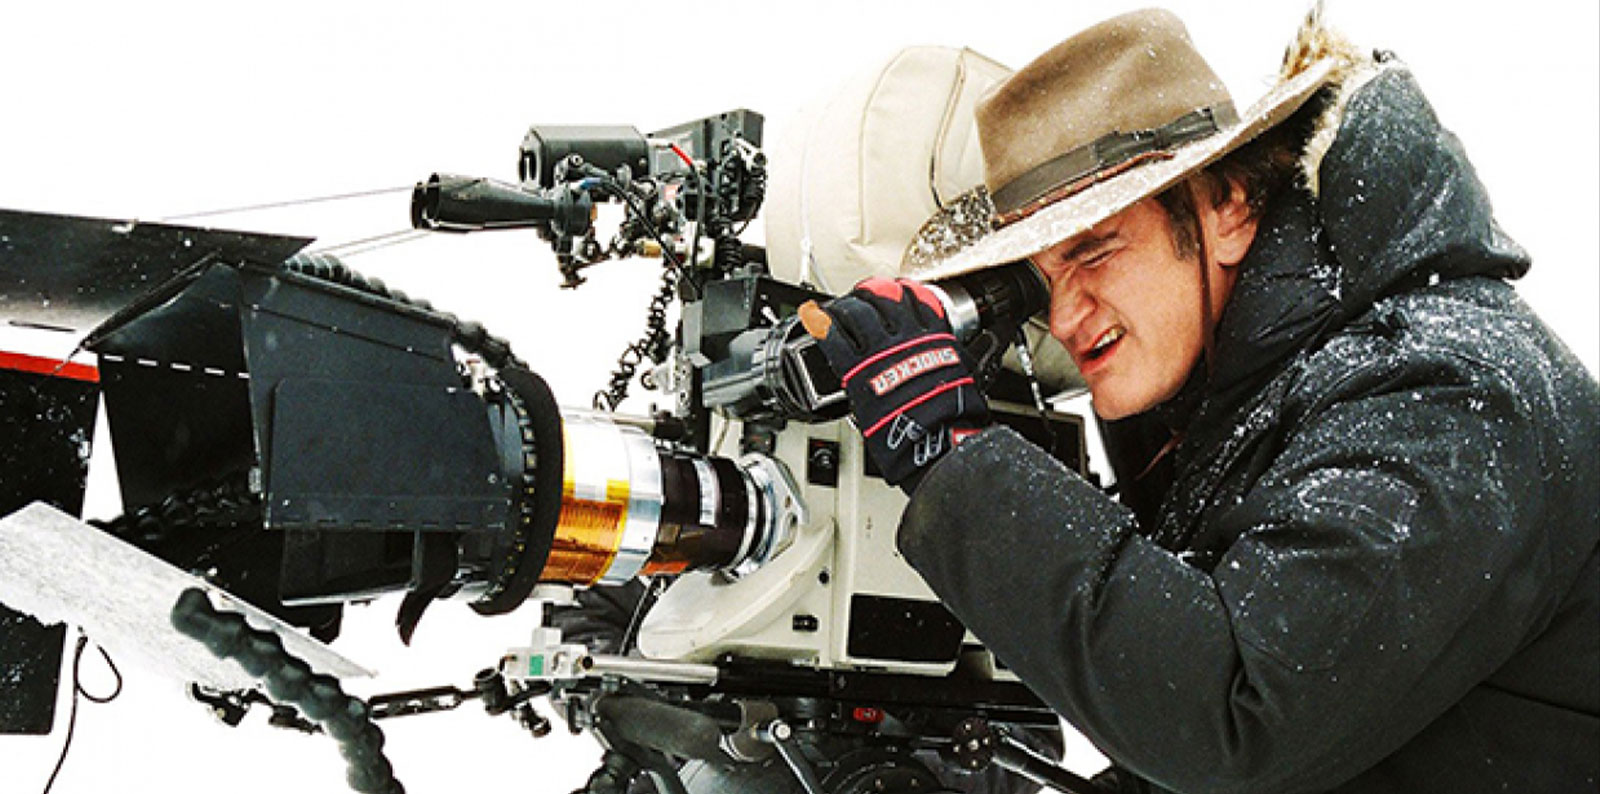 Quentin Tarantino Documentary